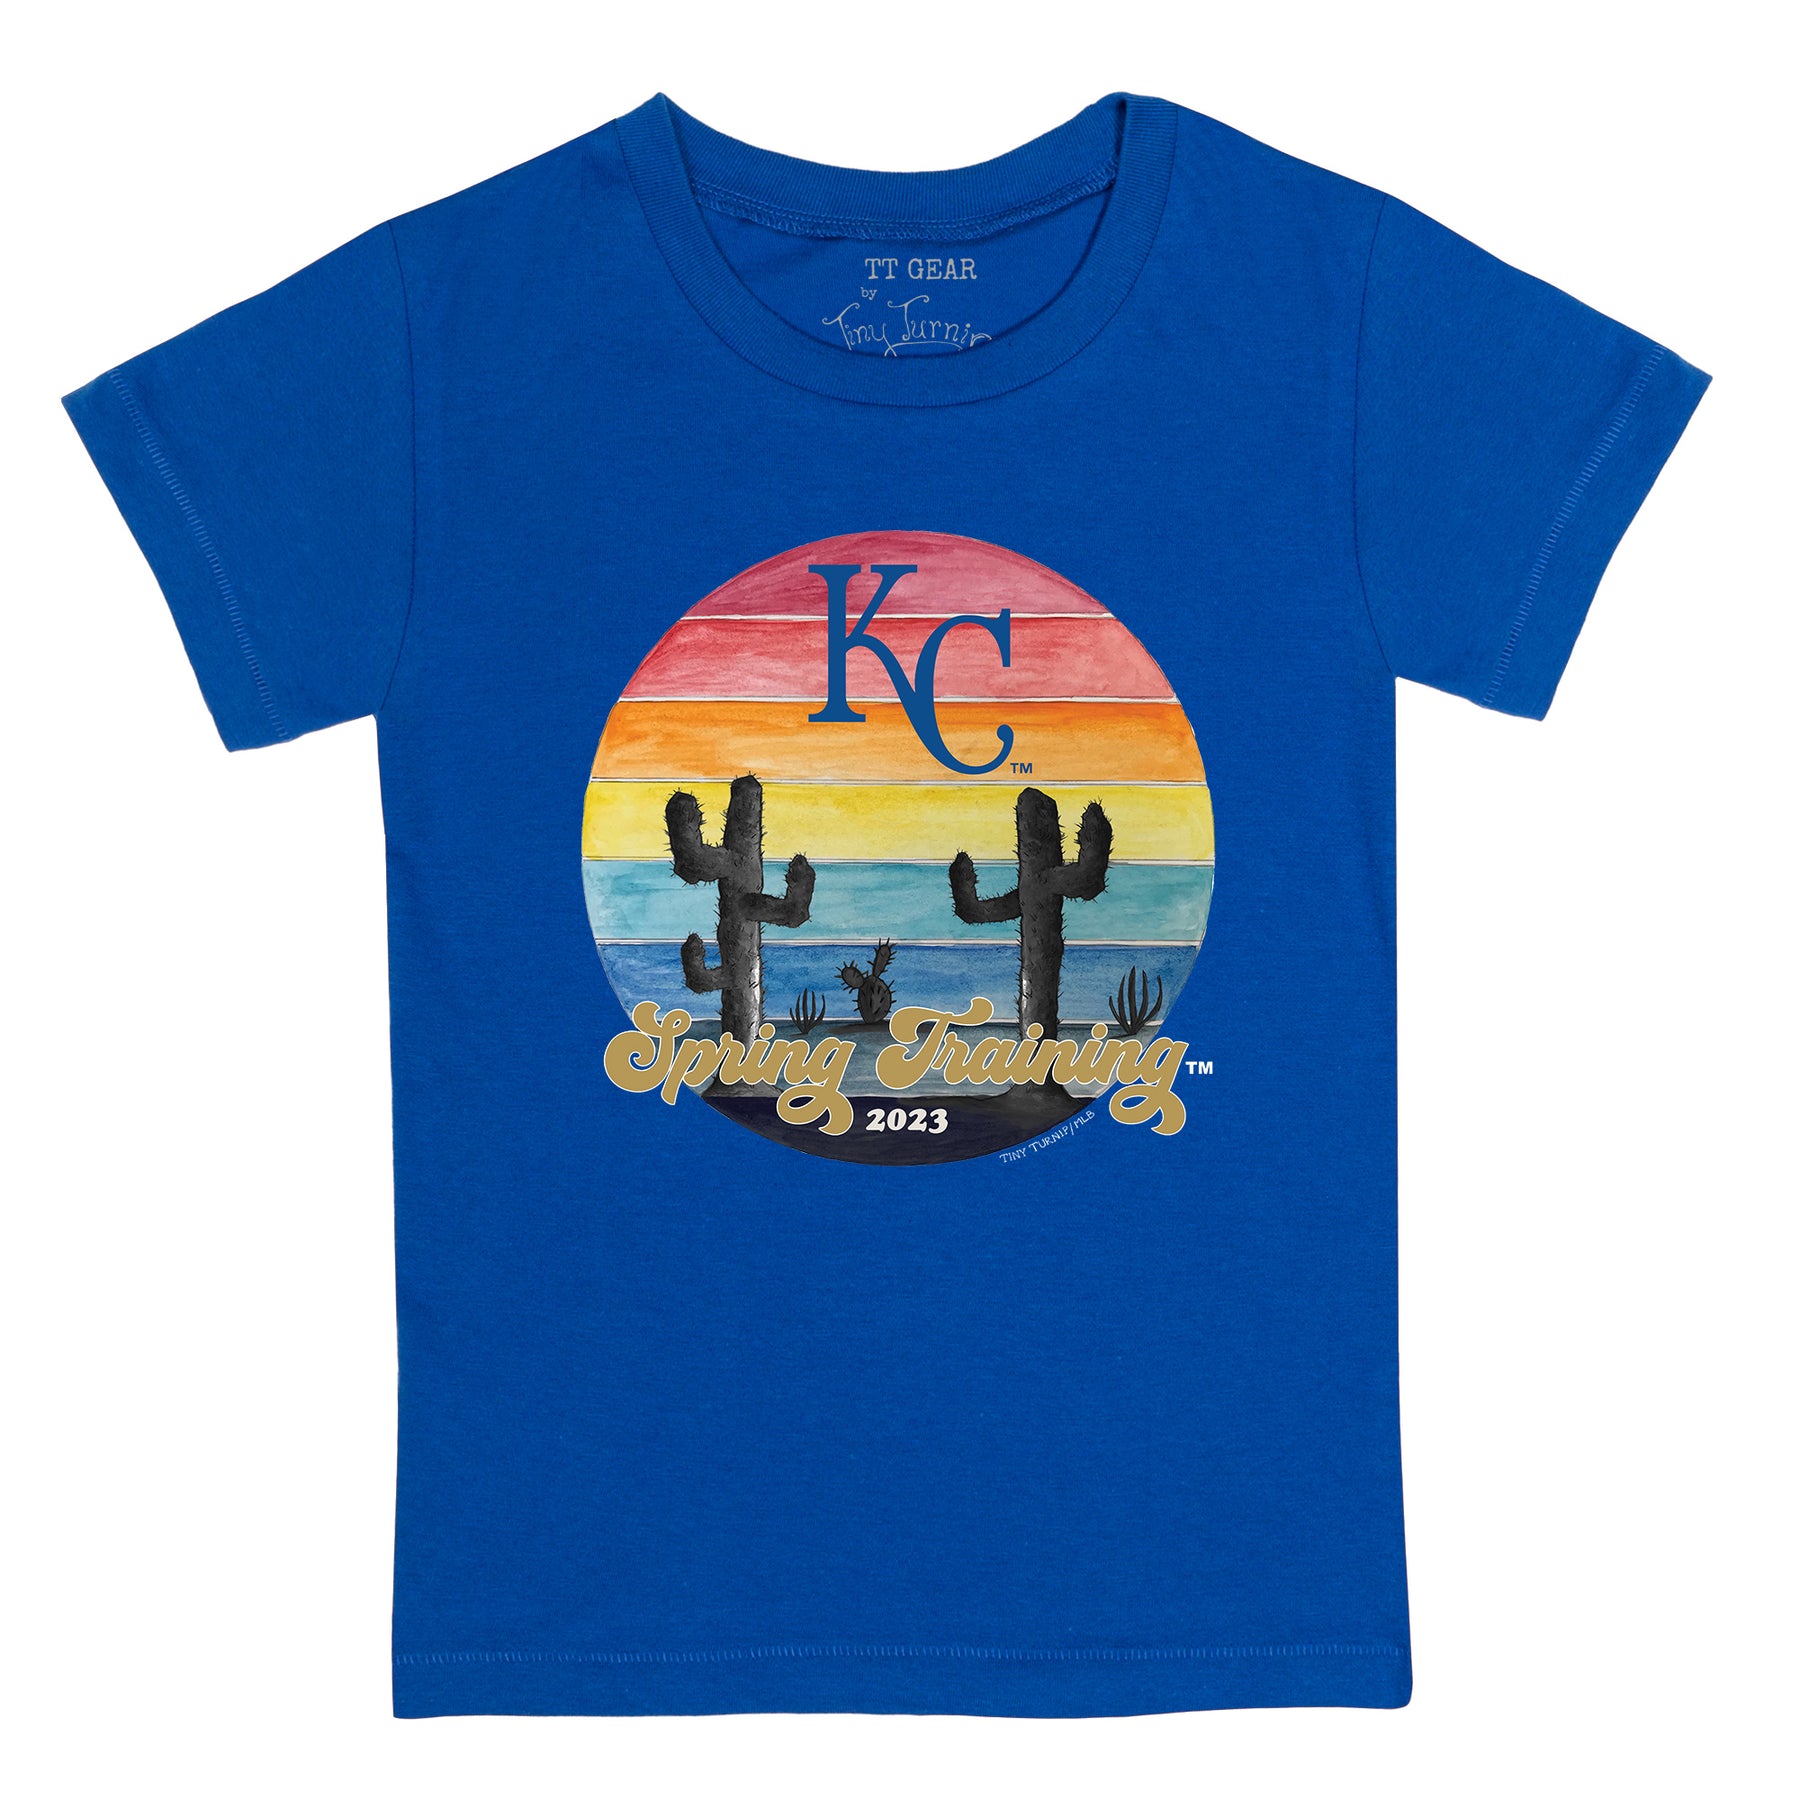 Kansas City Royals Spring Training 2023 Tee Shirt 18M / Royal Blue